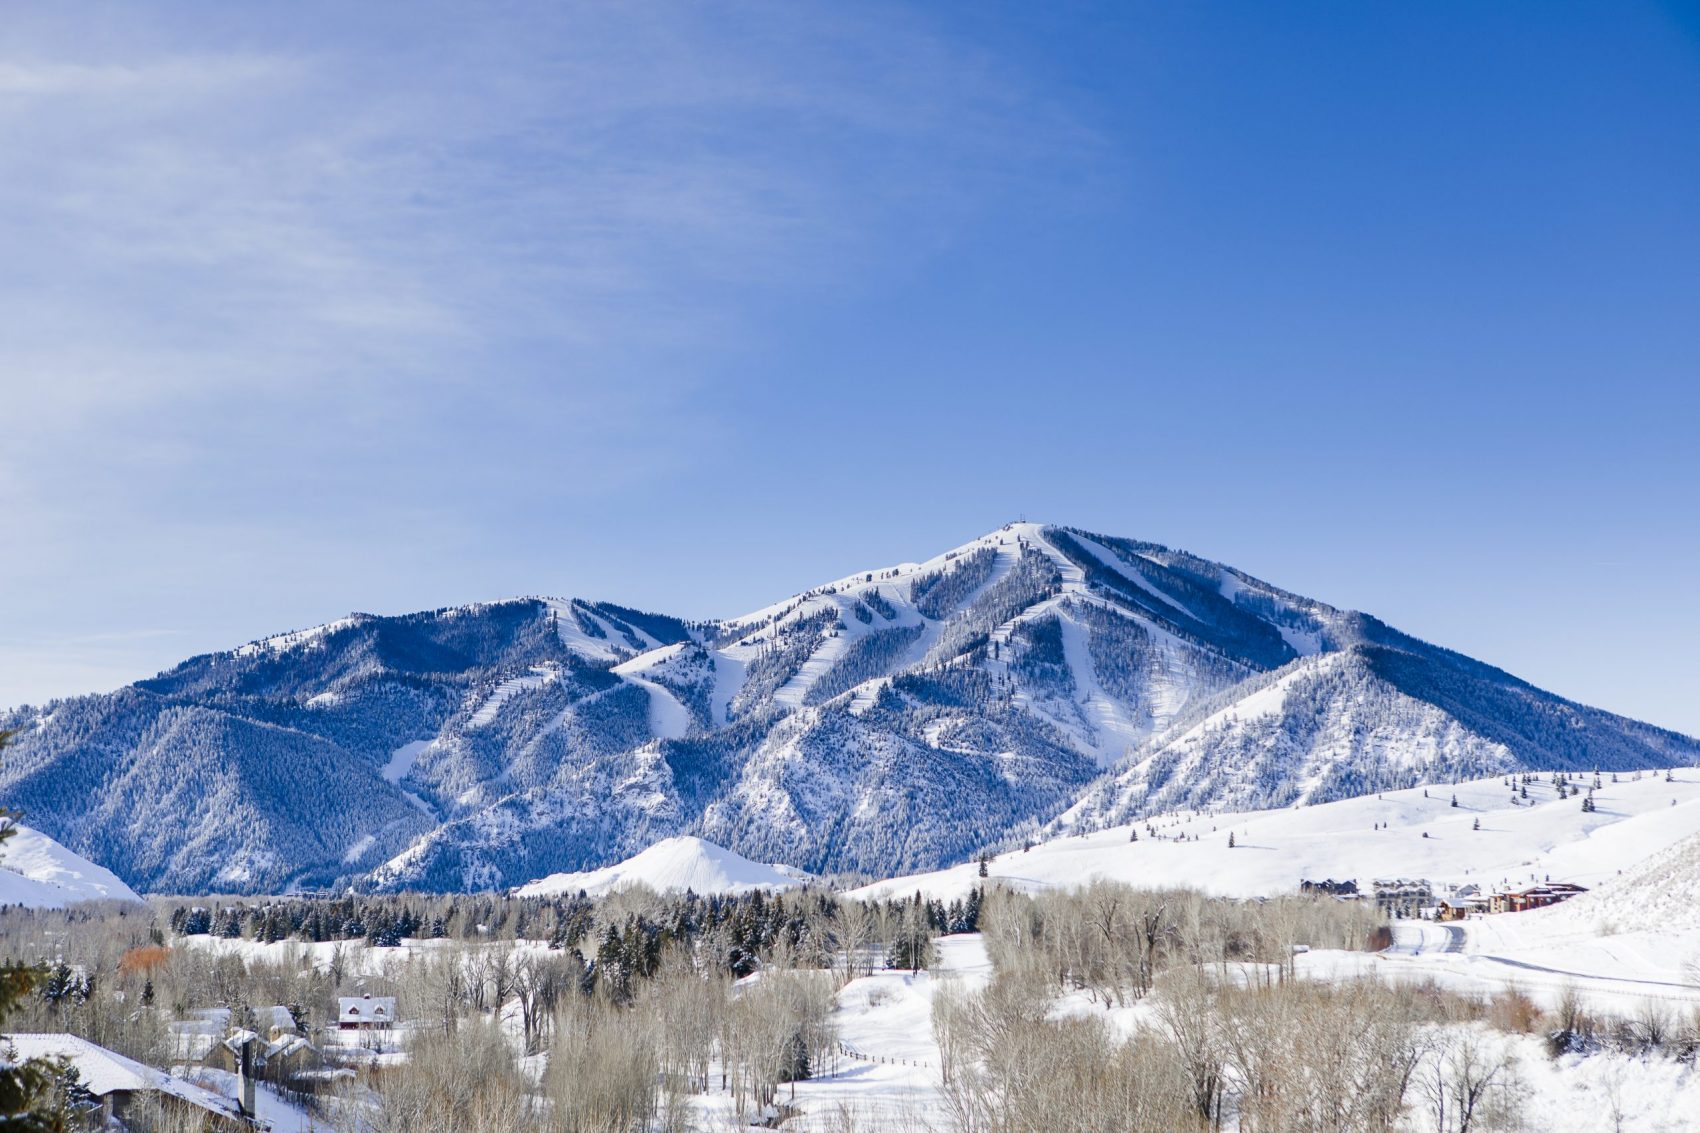 Pro's Guide To Shredding Sun Valley Resort, Idaho - SnowBrains